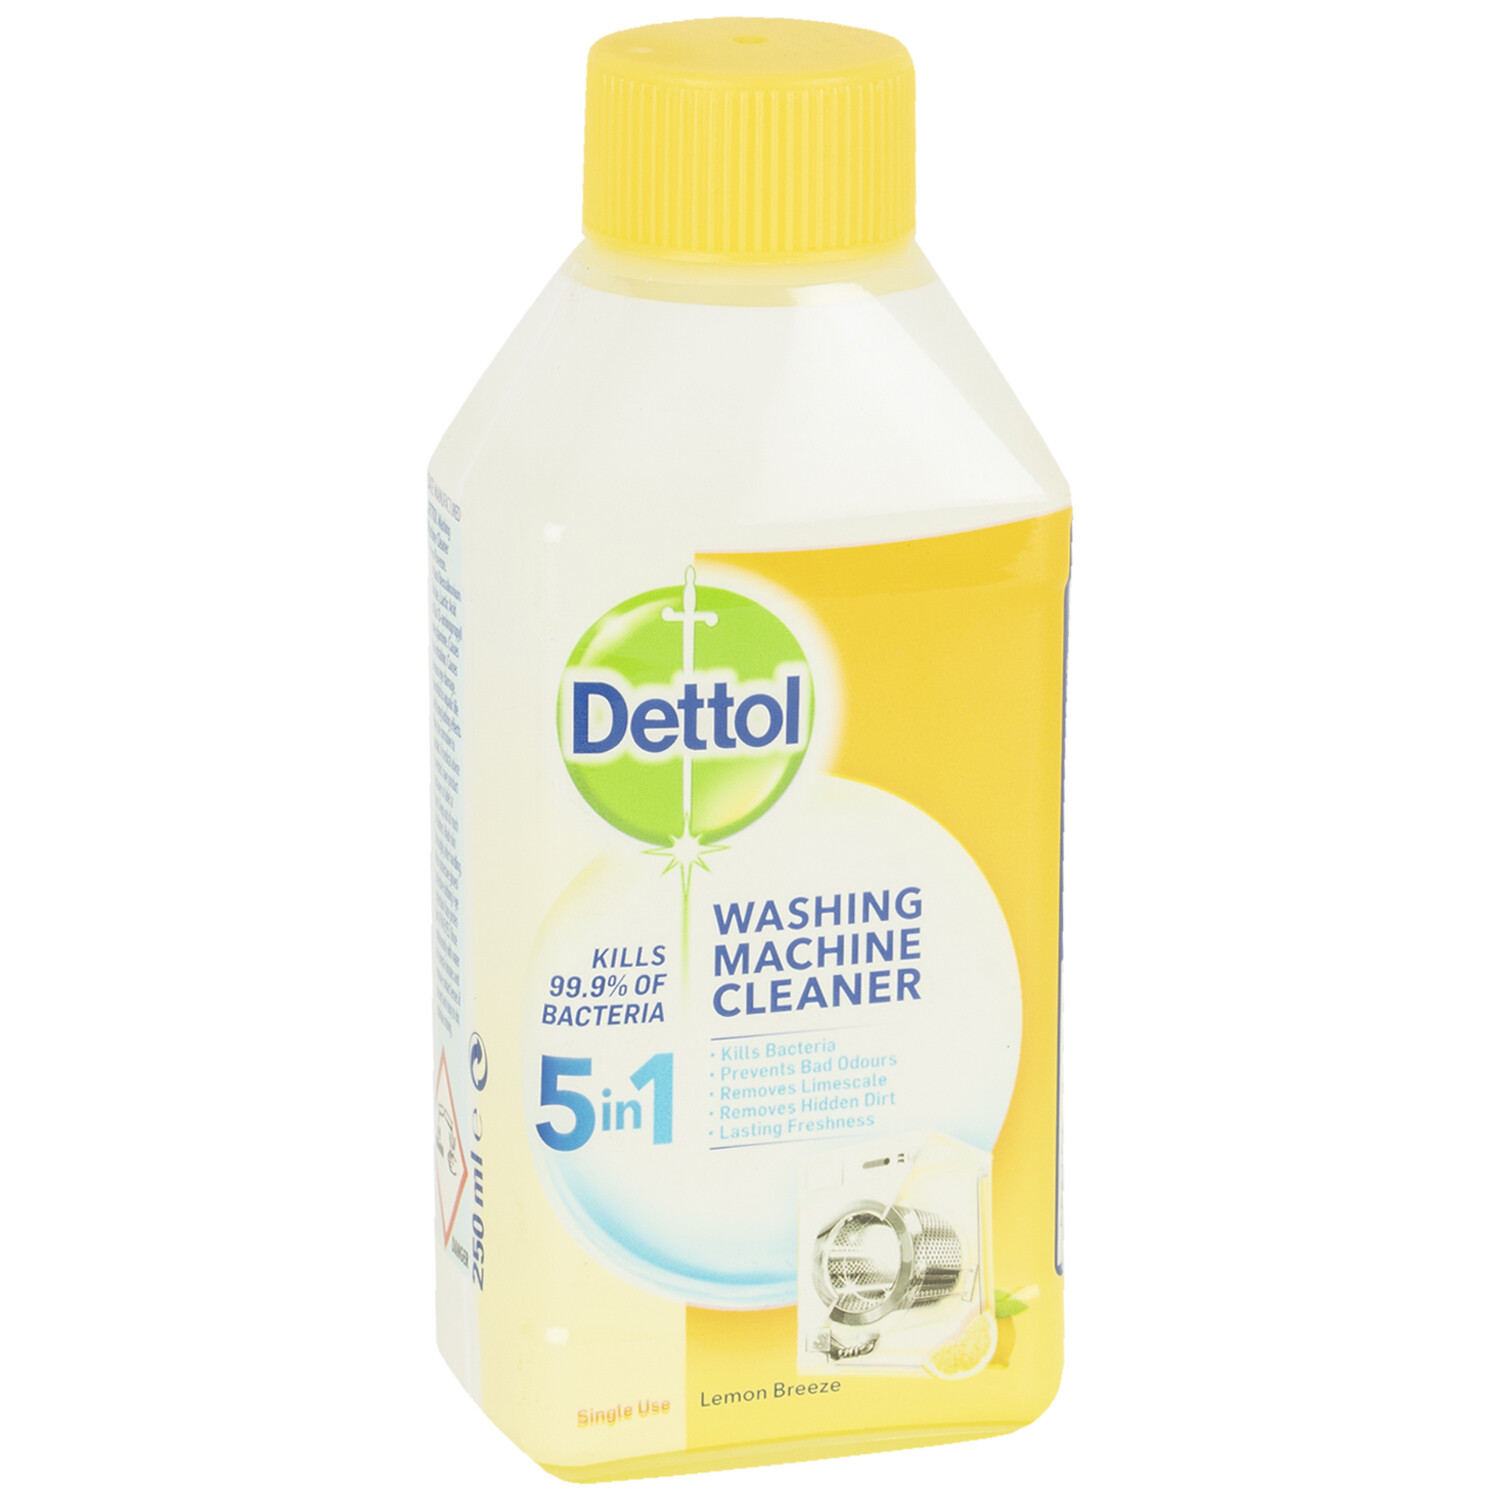 Dettol Washing Machine Cleaner 250ml - Lemon Image